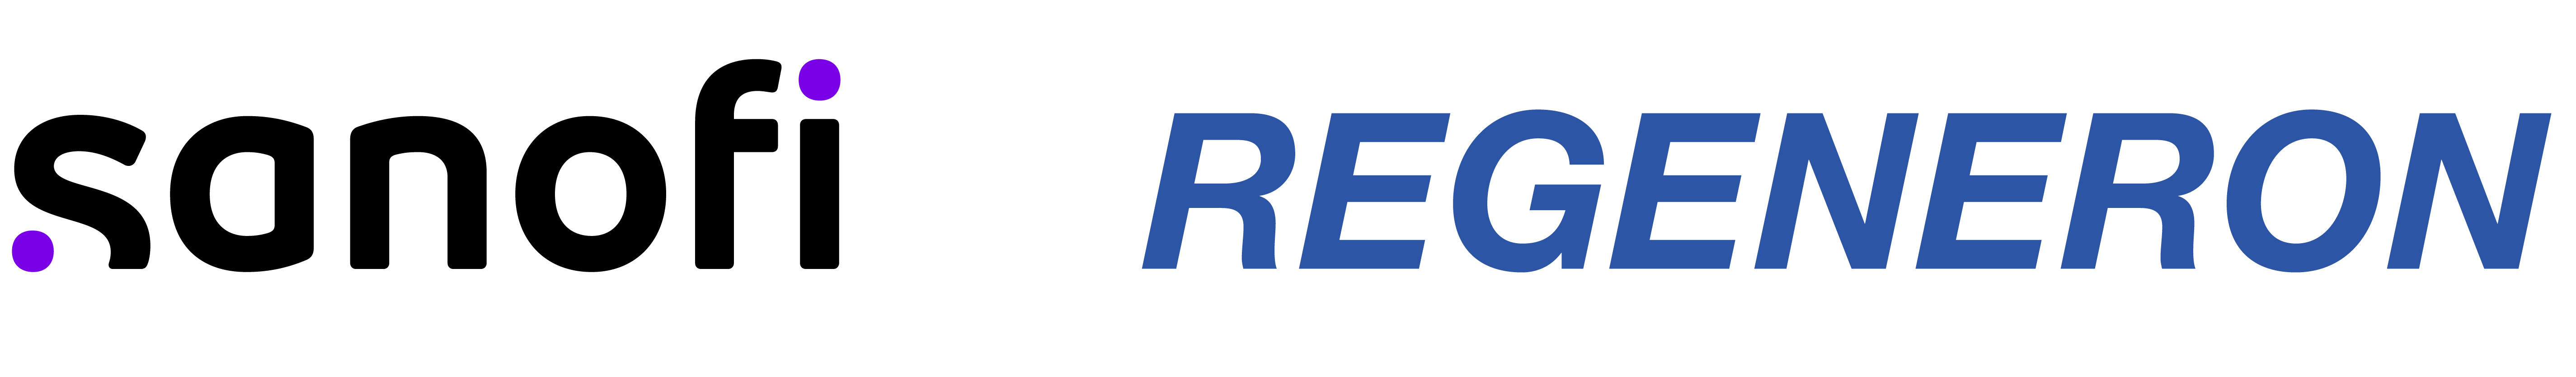 Sanofi-Regeneron-Logos-RGB Horizontal (1).png